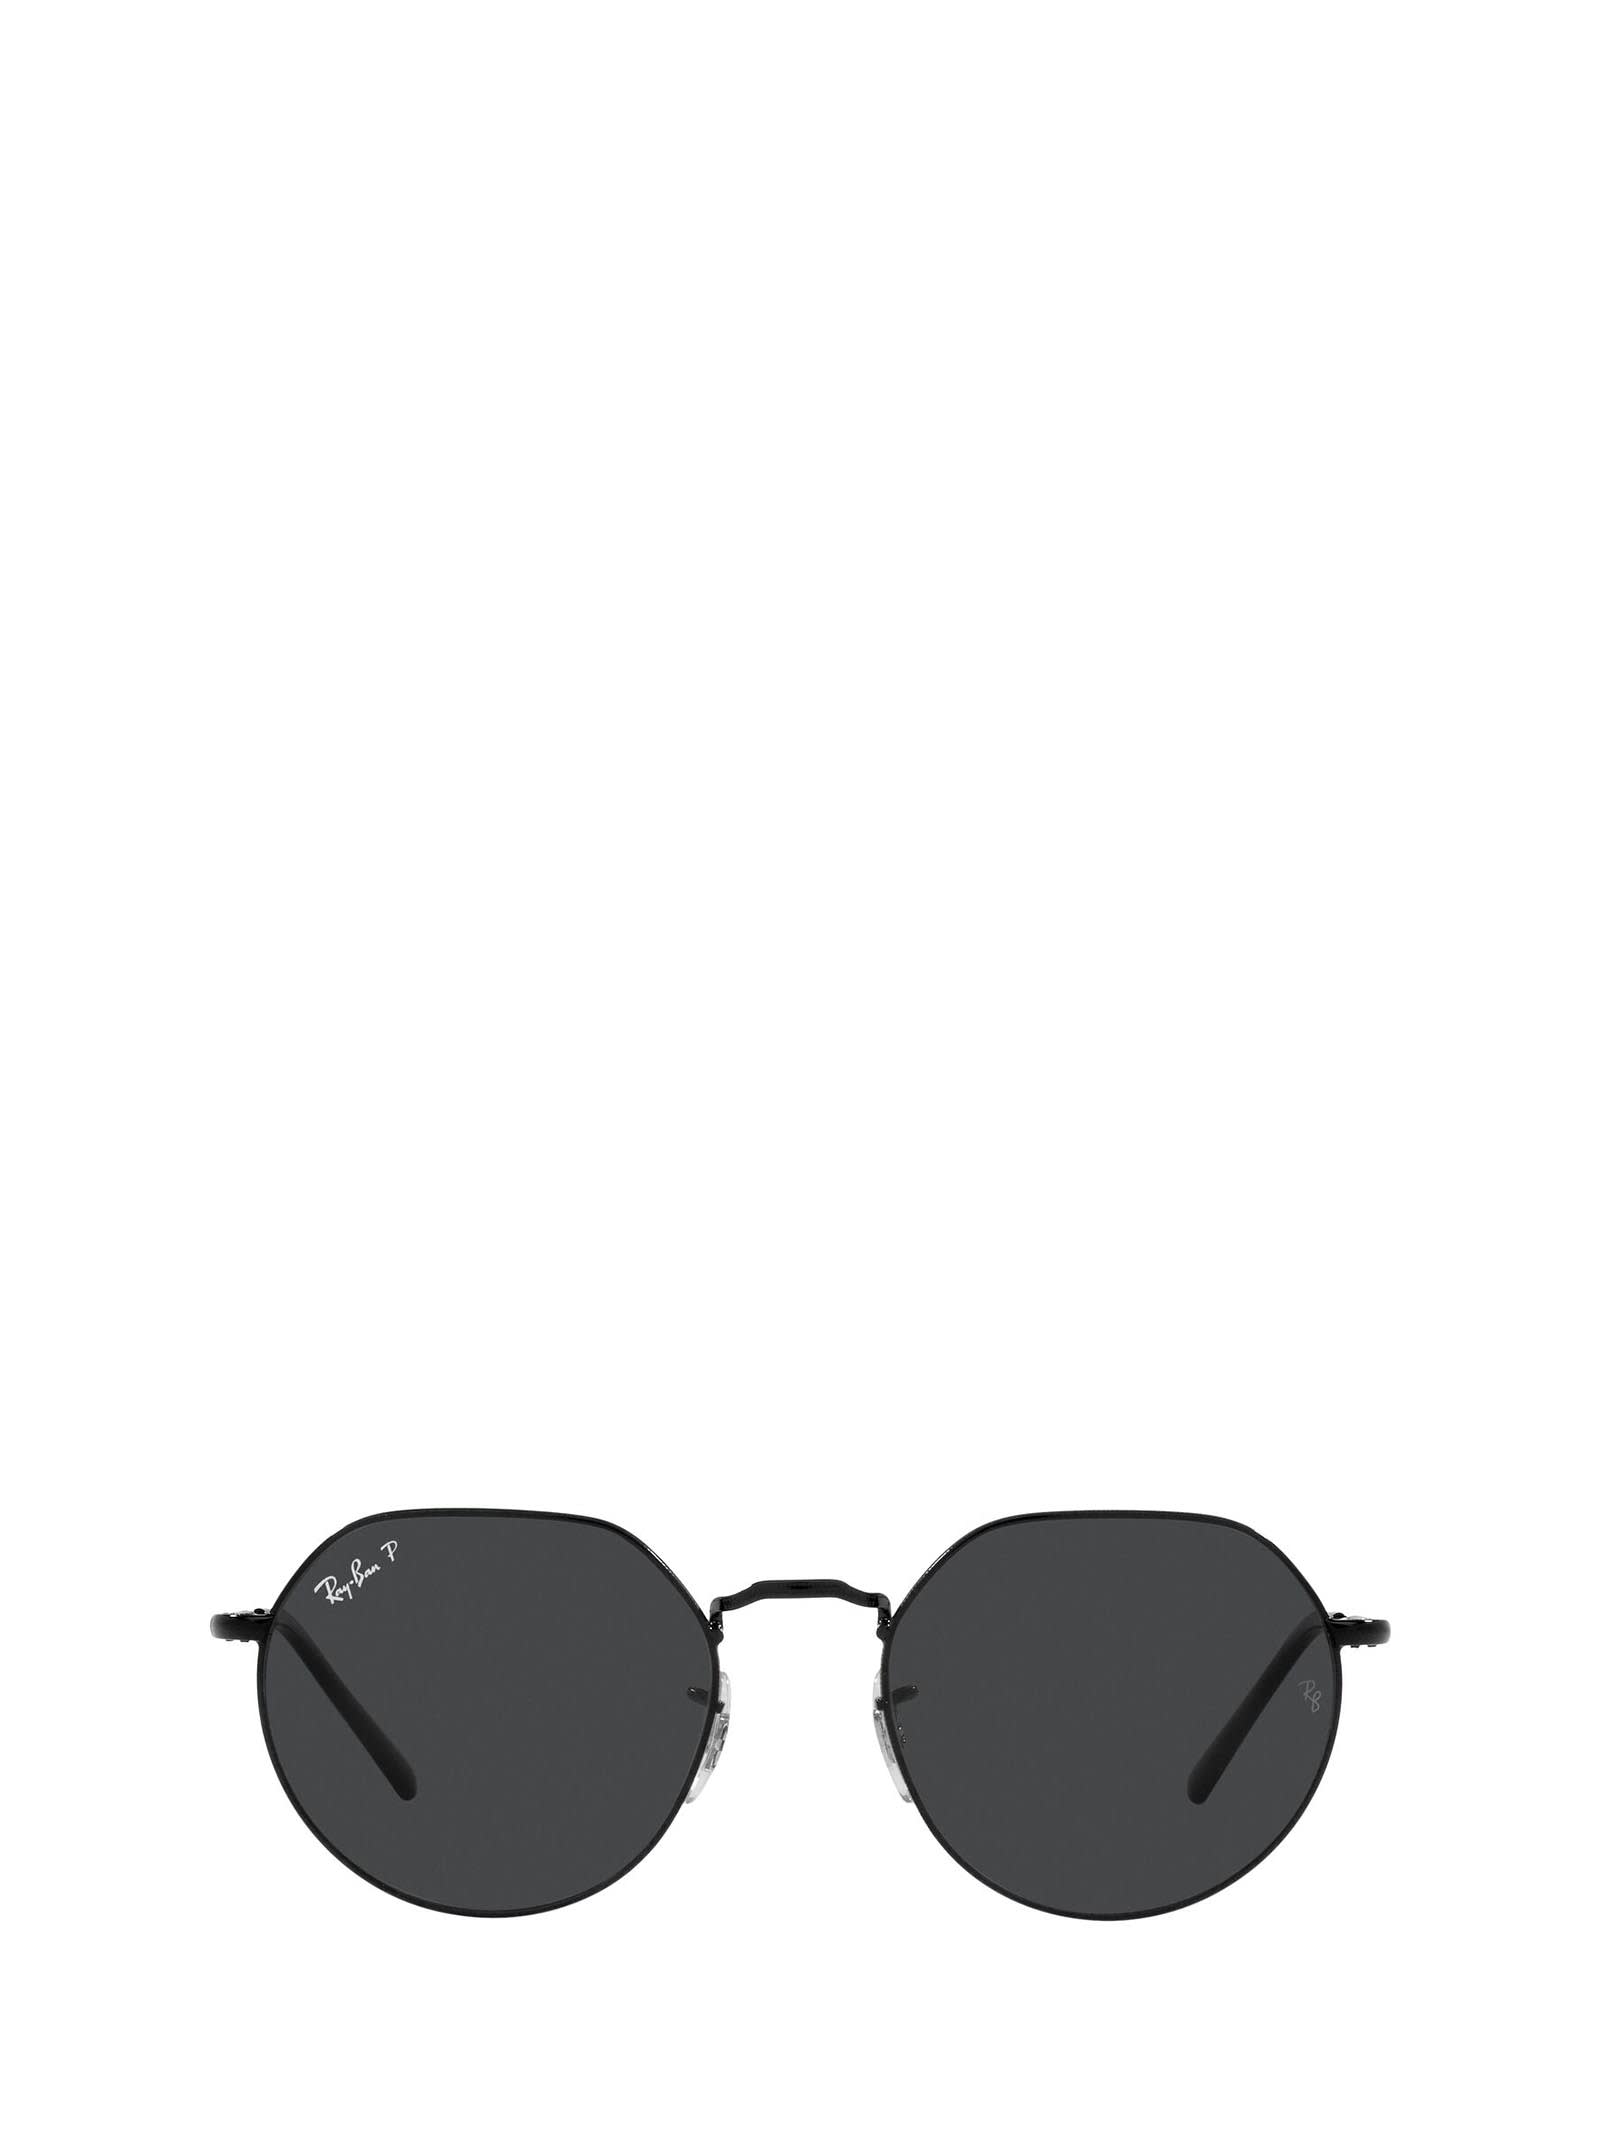 Ray Ban Ray-ban Rb3565 Black Sunglasses